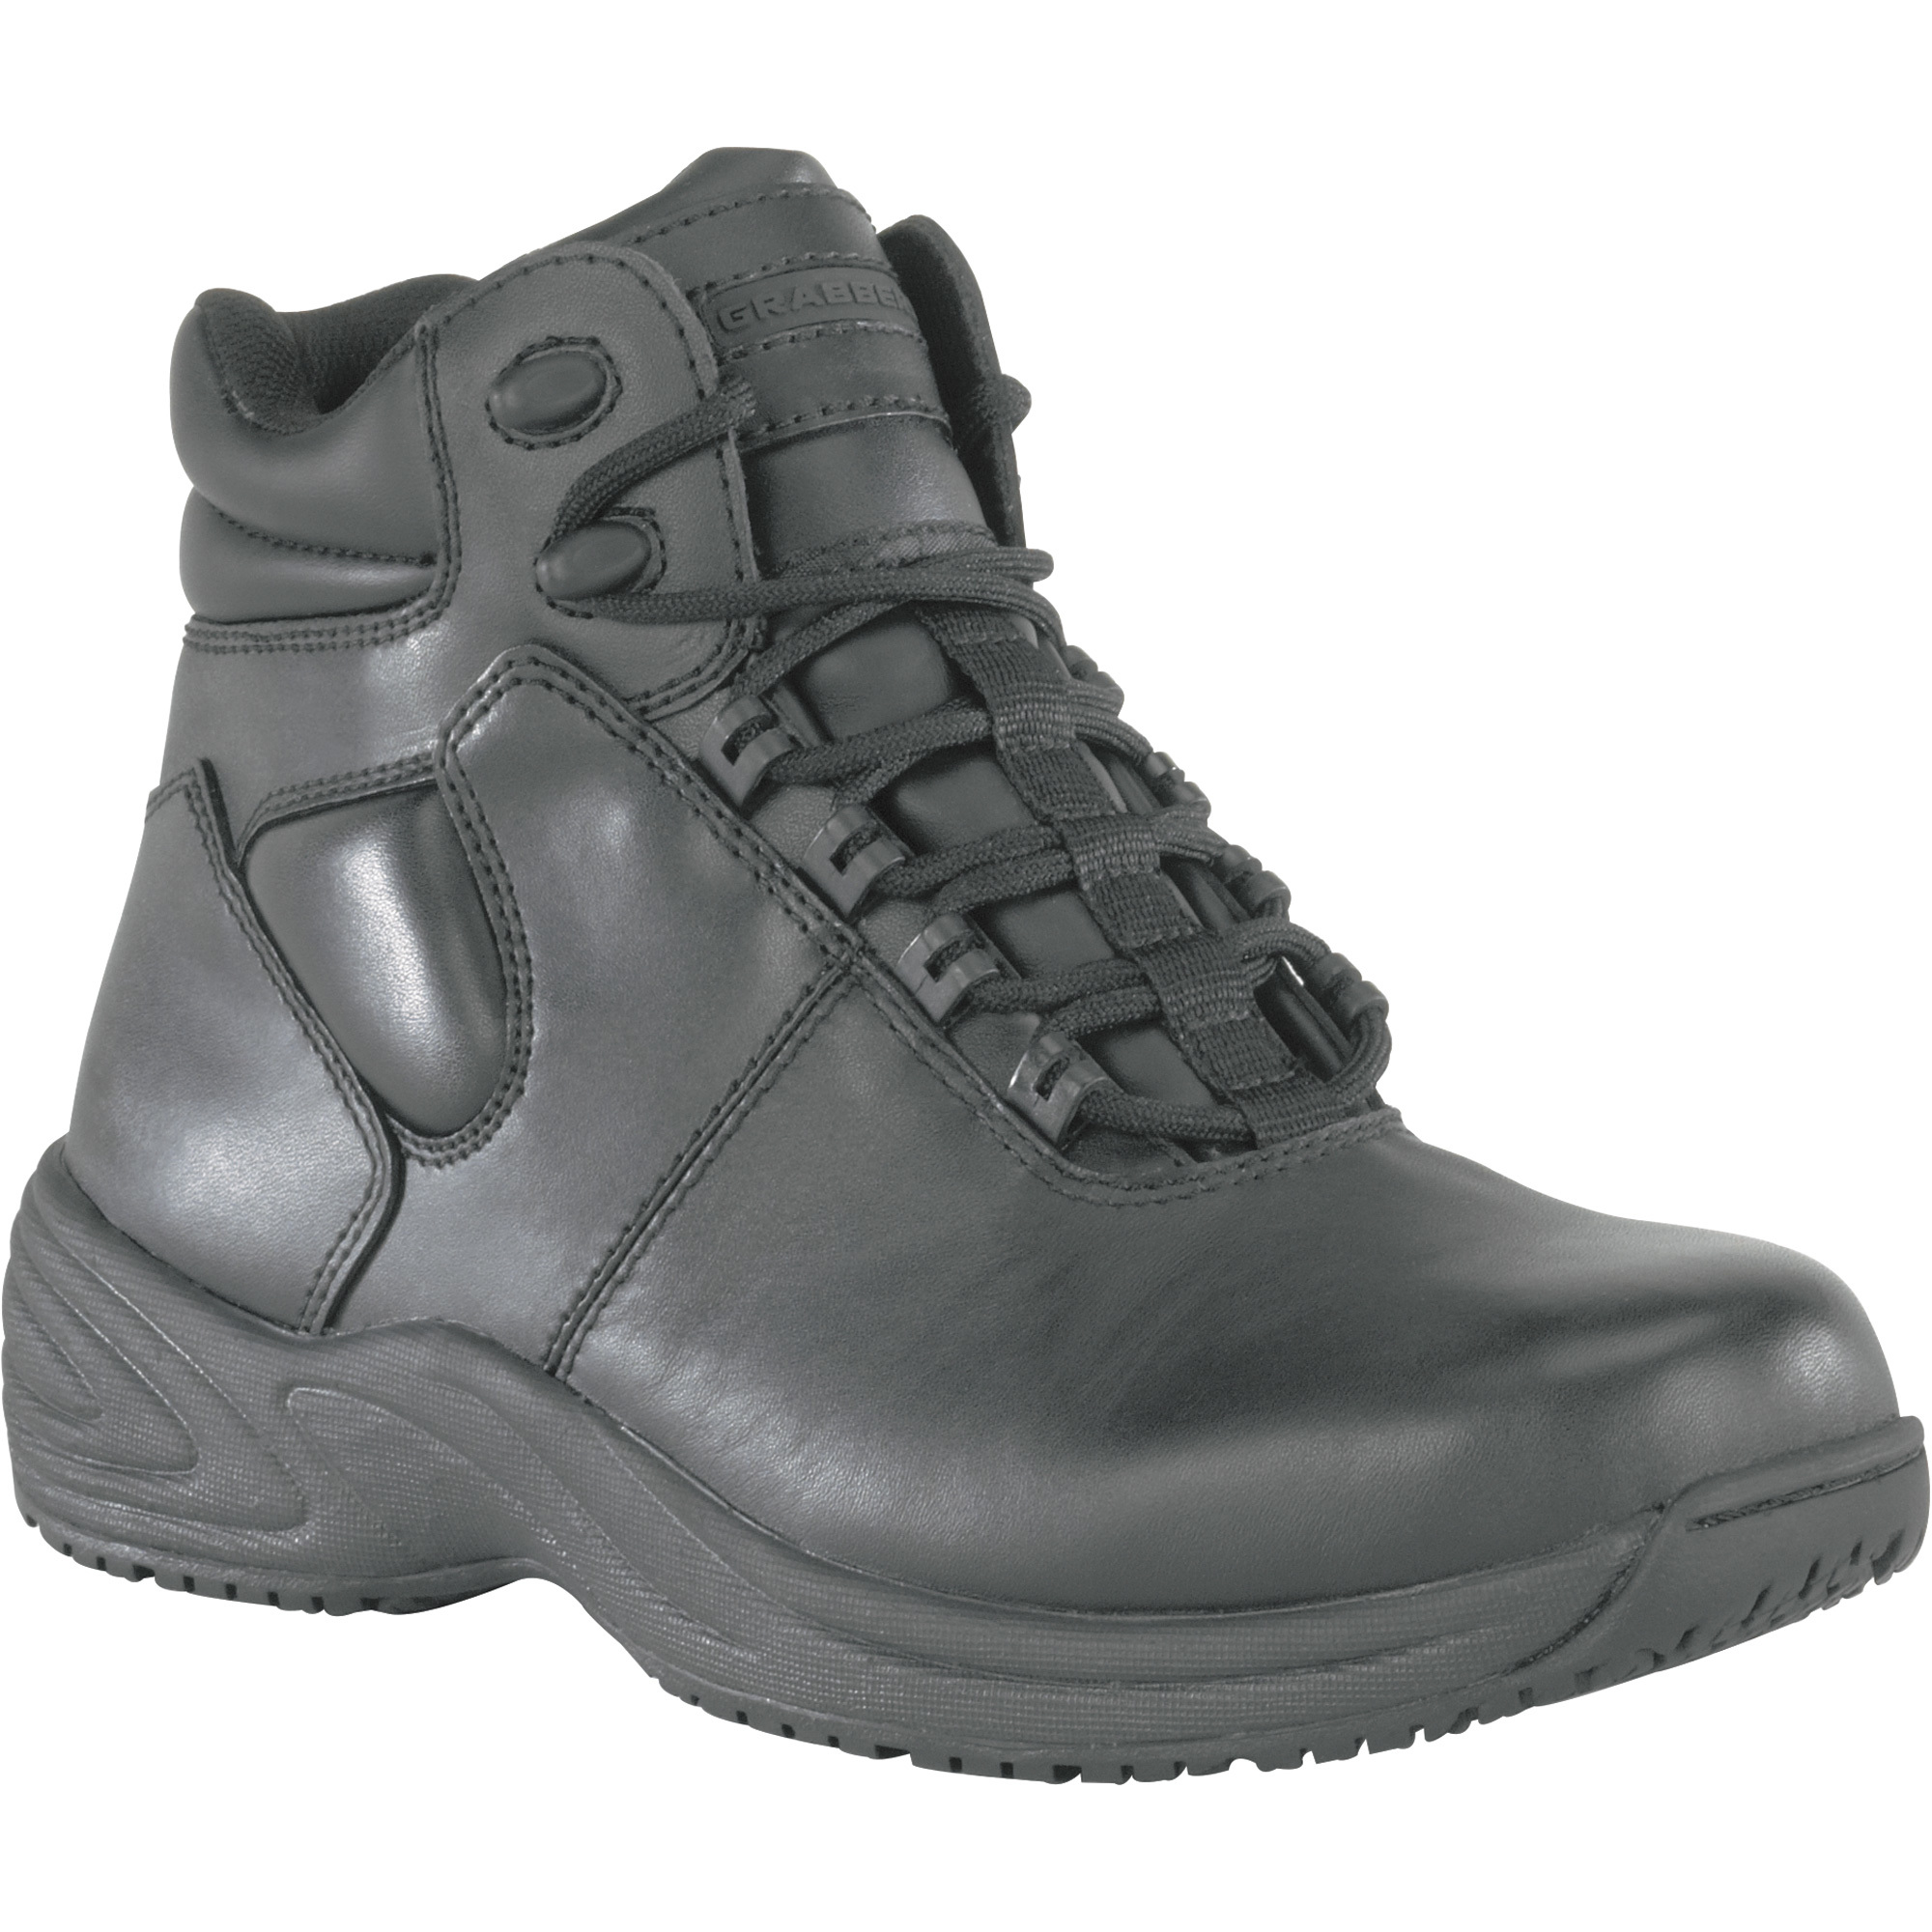 Grabbers Men's 6Inch Fastener Work Boots - Black, Size 9 Wide, Model G1240